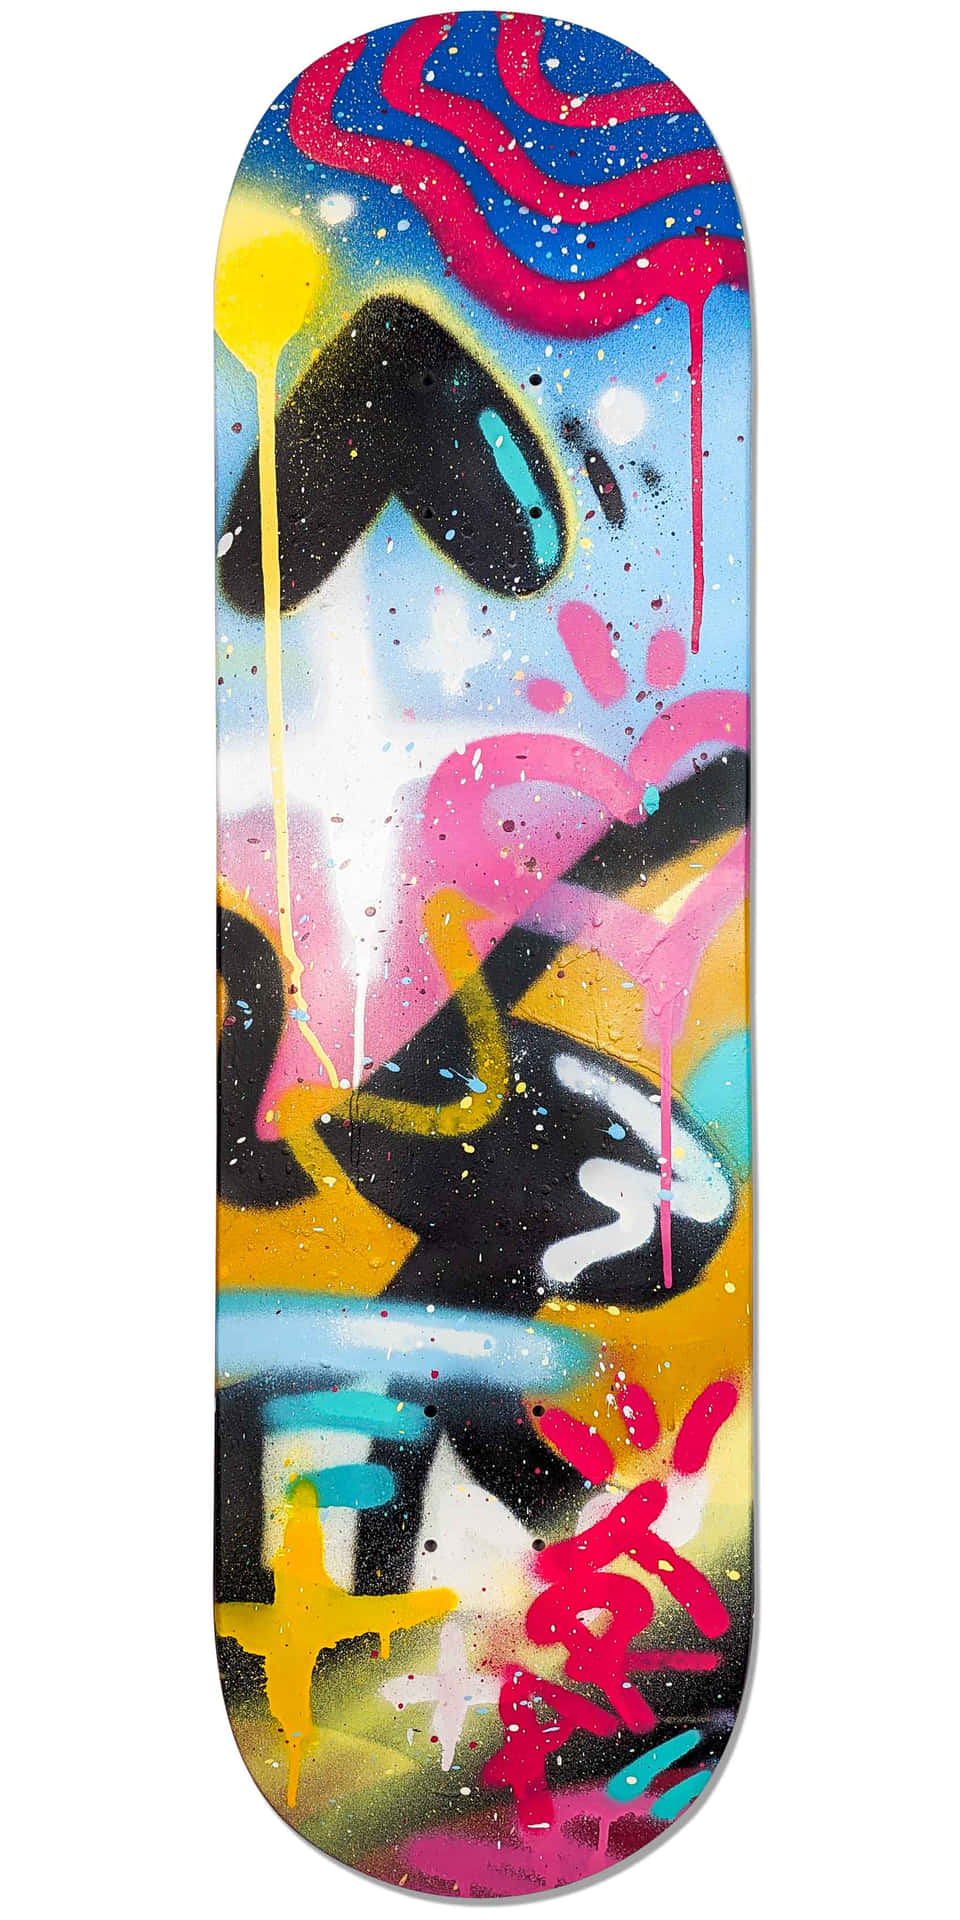 Colorful Graffiti Skateboard Deck Wallpaper